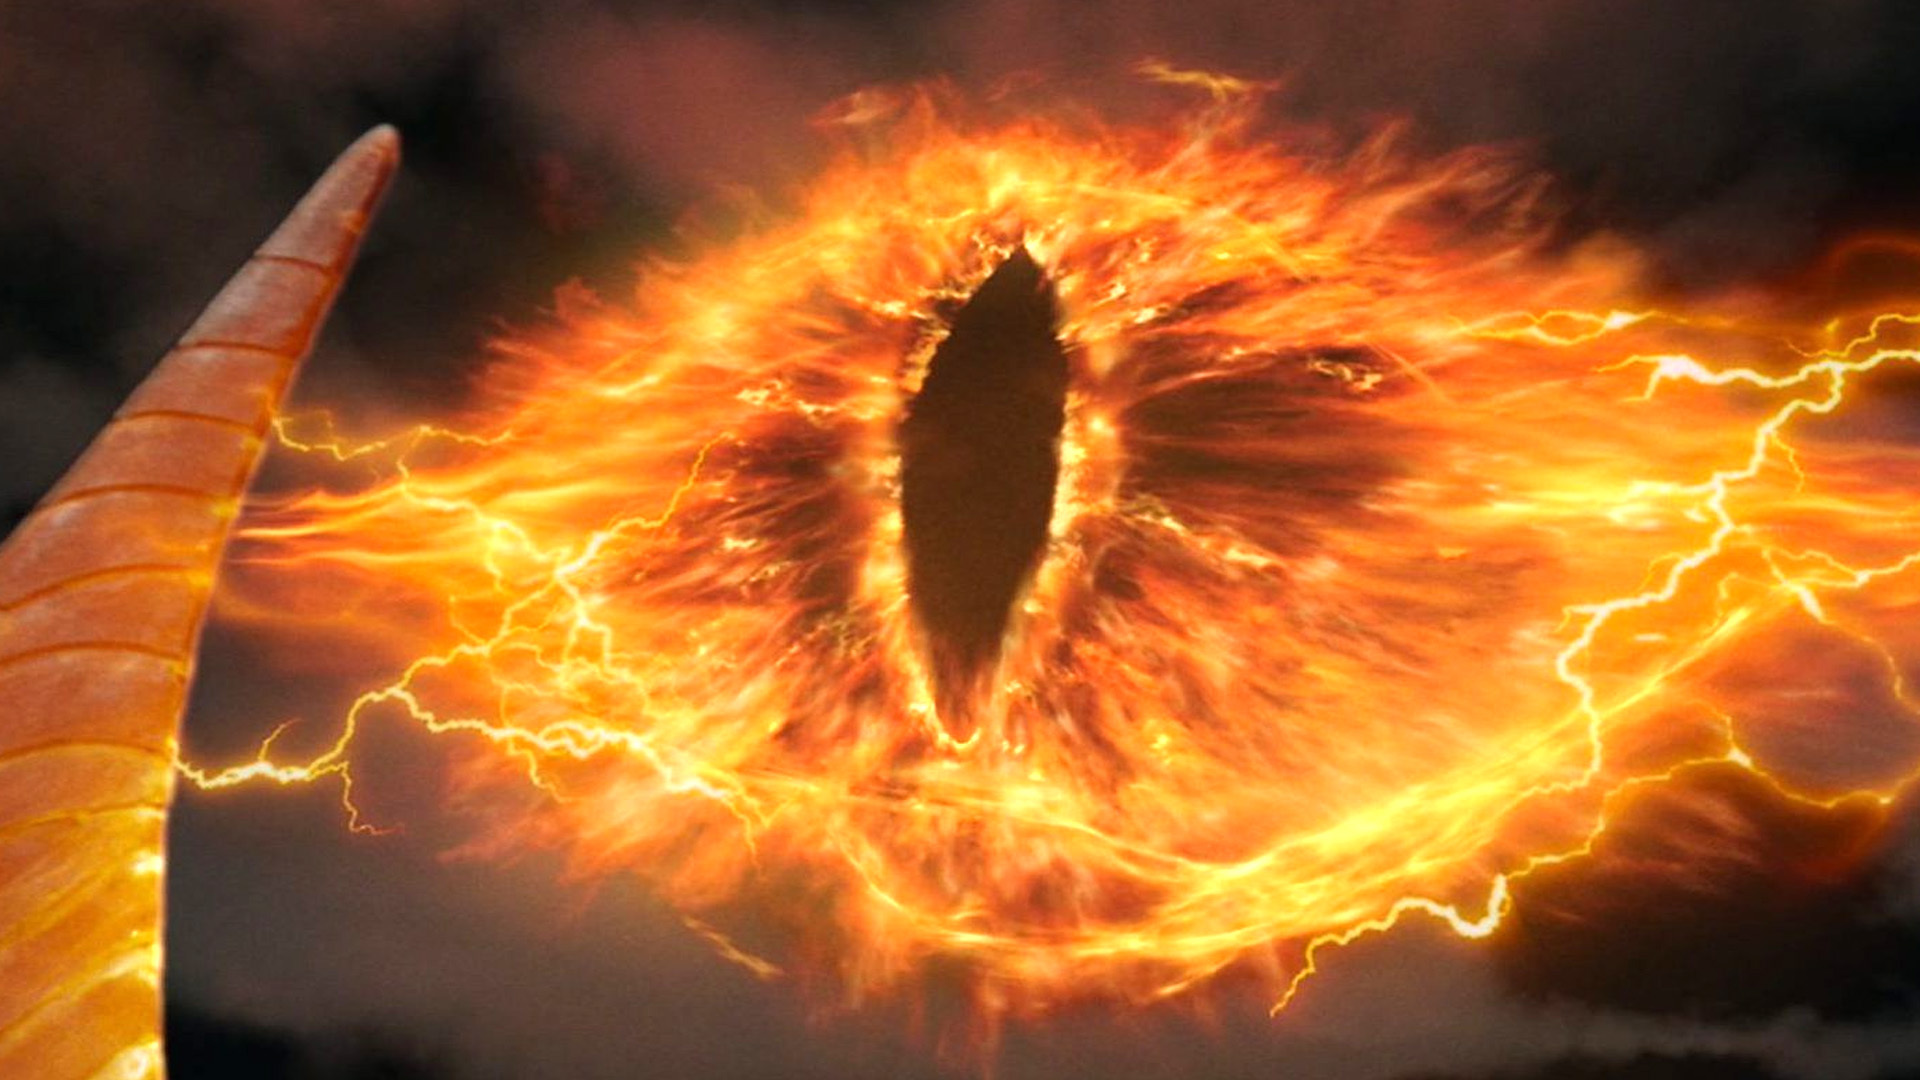 Rings of power sauron. Кольцо око Саурона. Властелин колец око Саурона. Око Саурона (Всевидящее око). Властелин колец глаз Саурона.